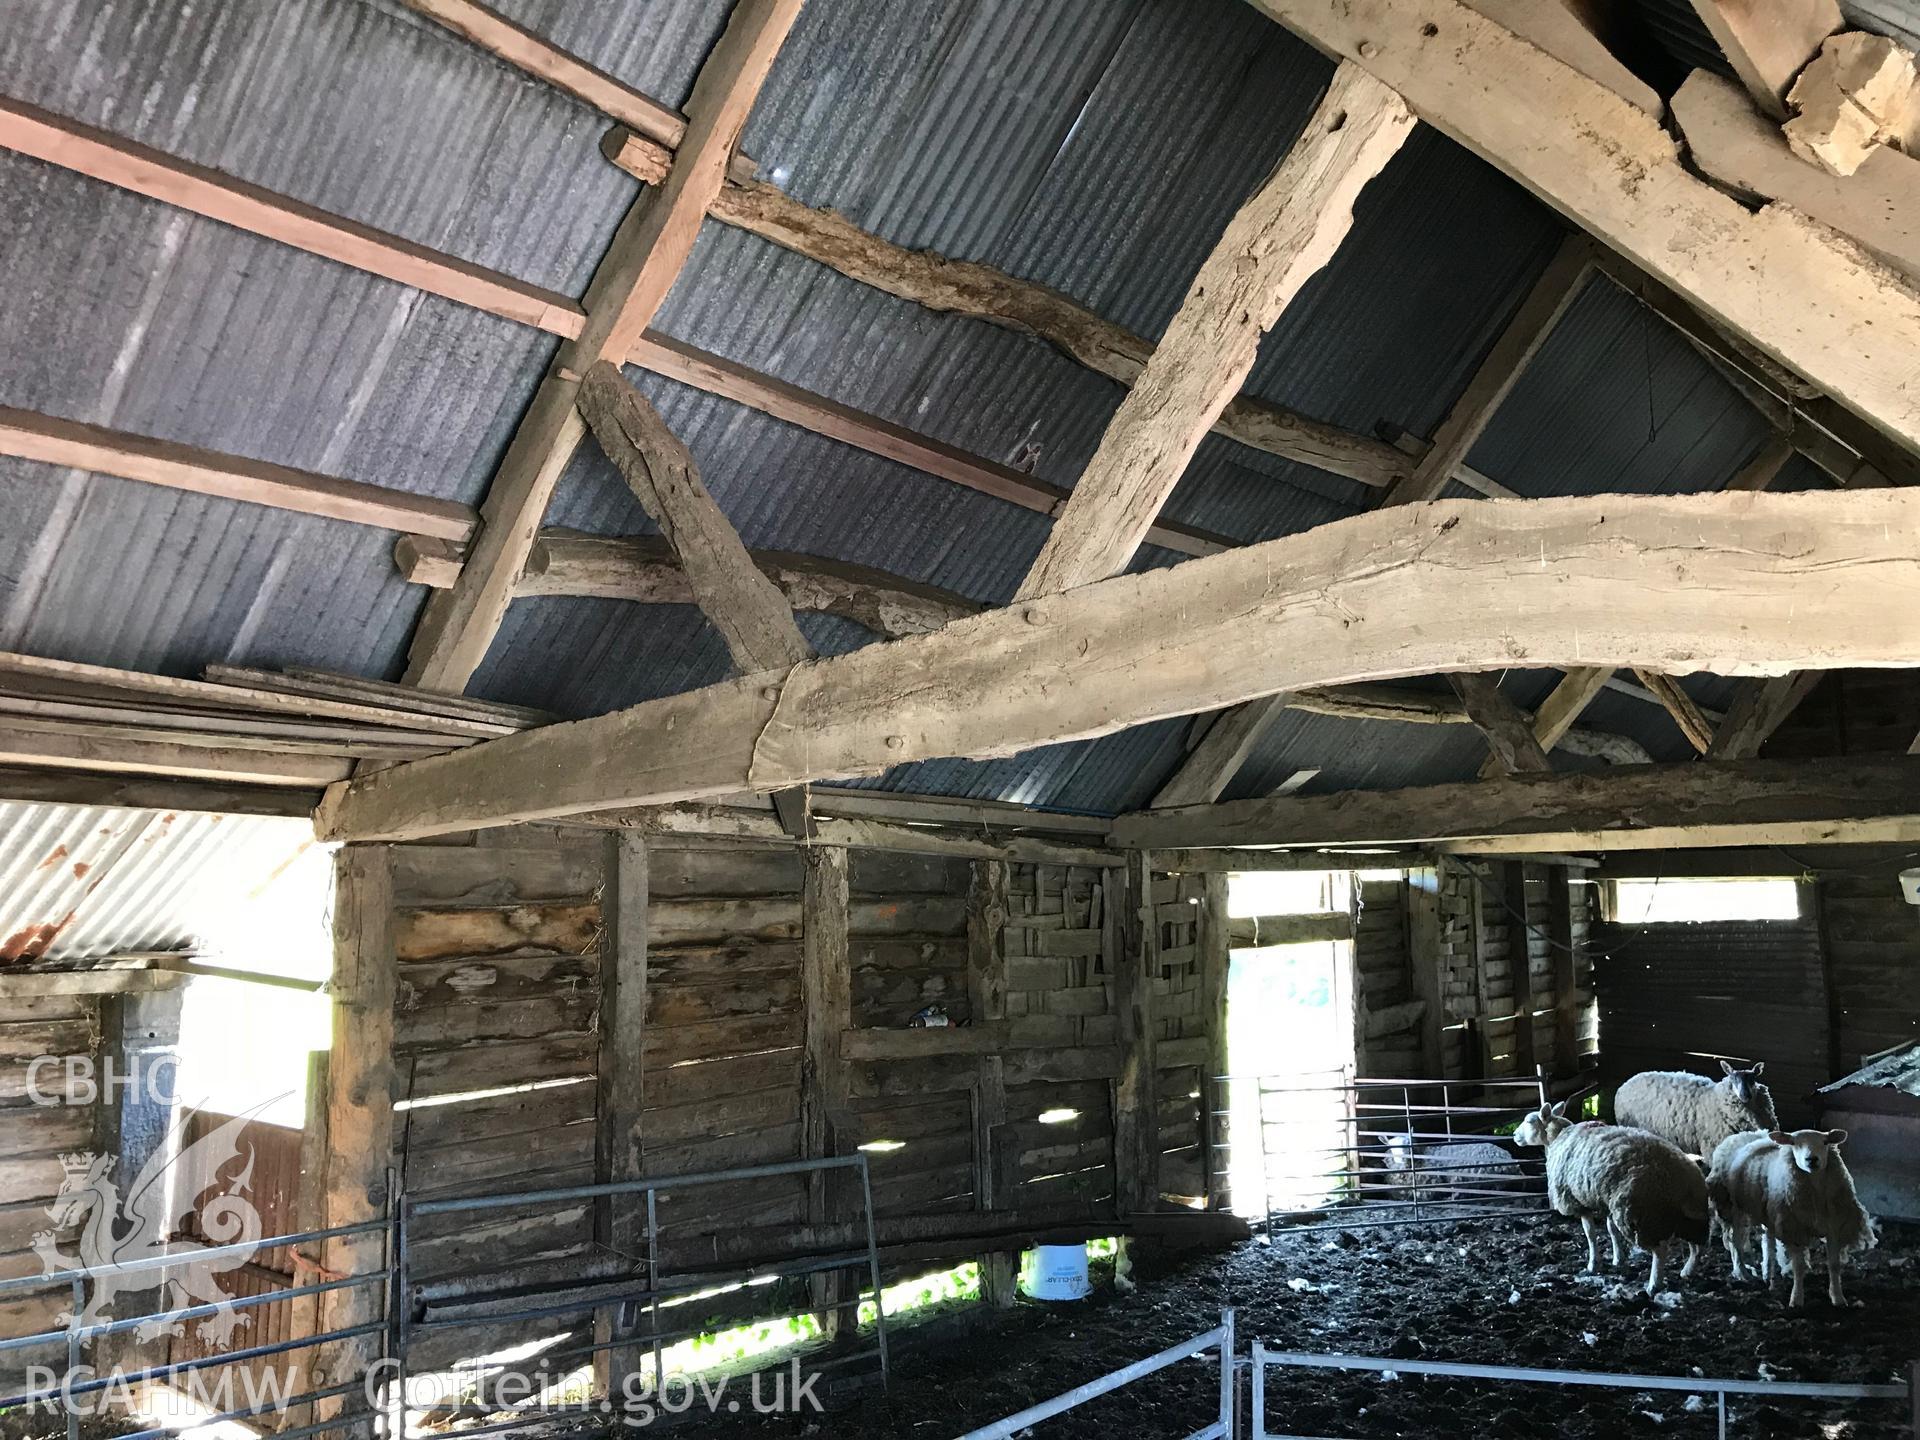 Colour photo showing interior view of Church Farm barn, Llanbadarn Fawr (Powys), taken by Paul R. Davis, 19th May 2018.